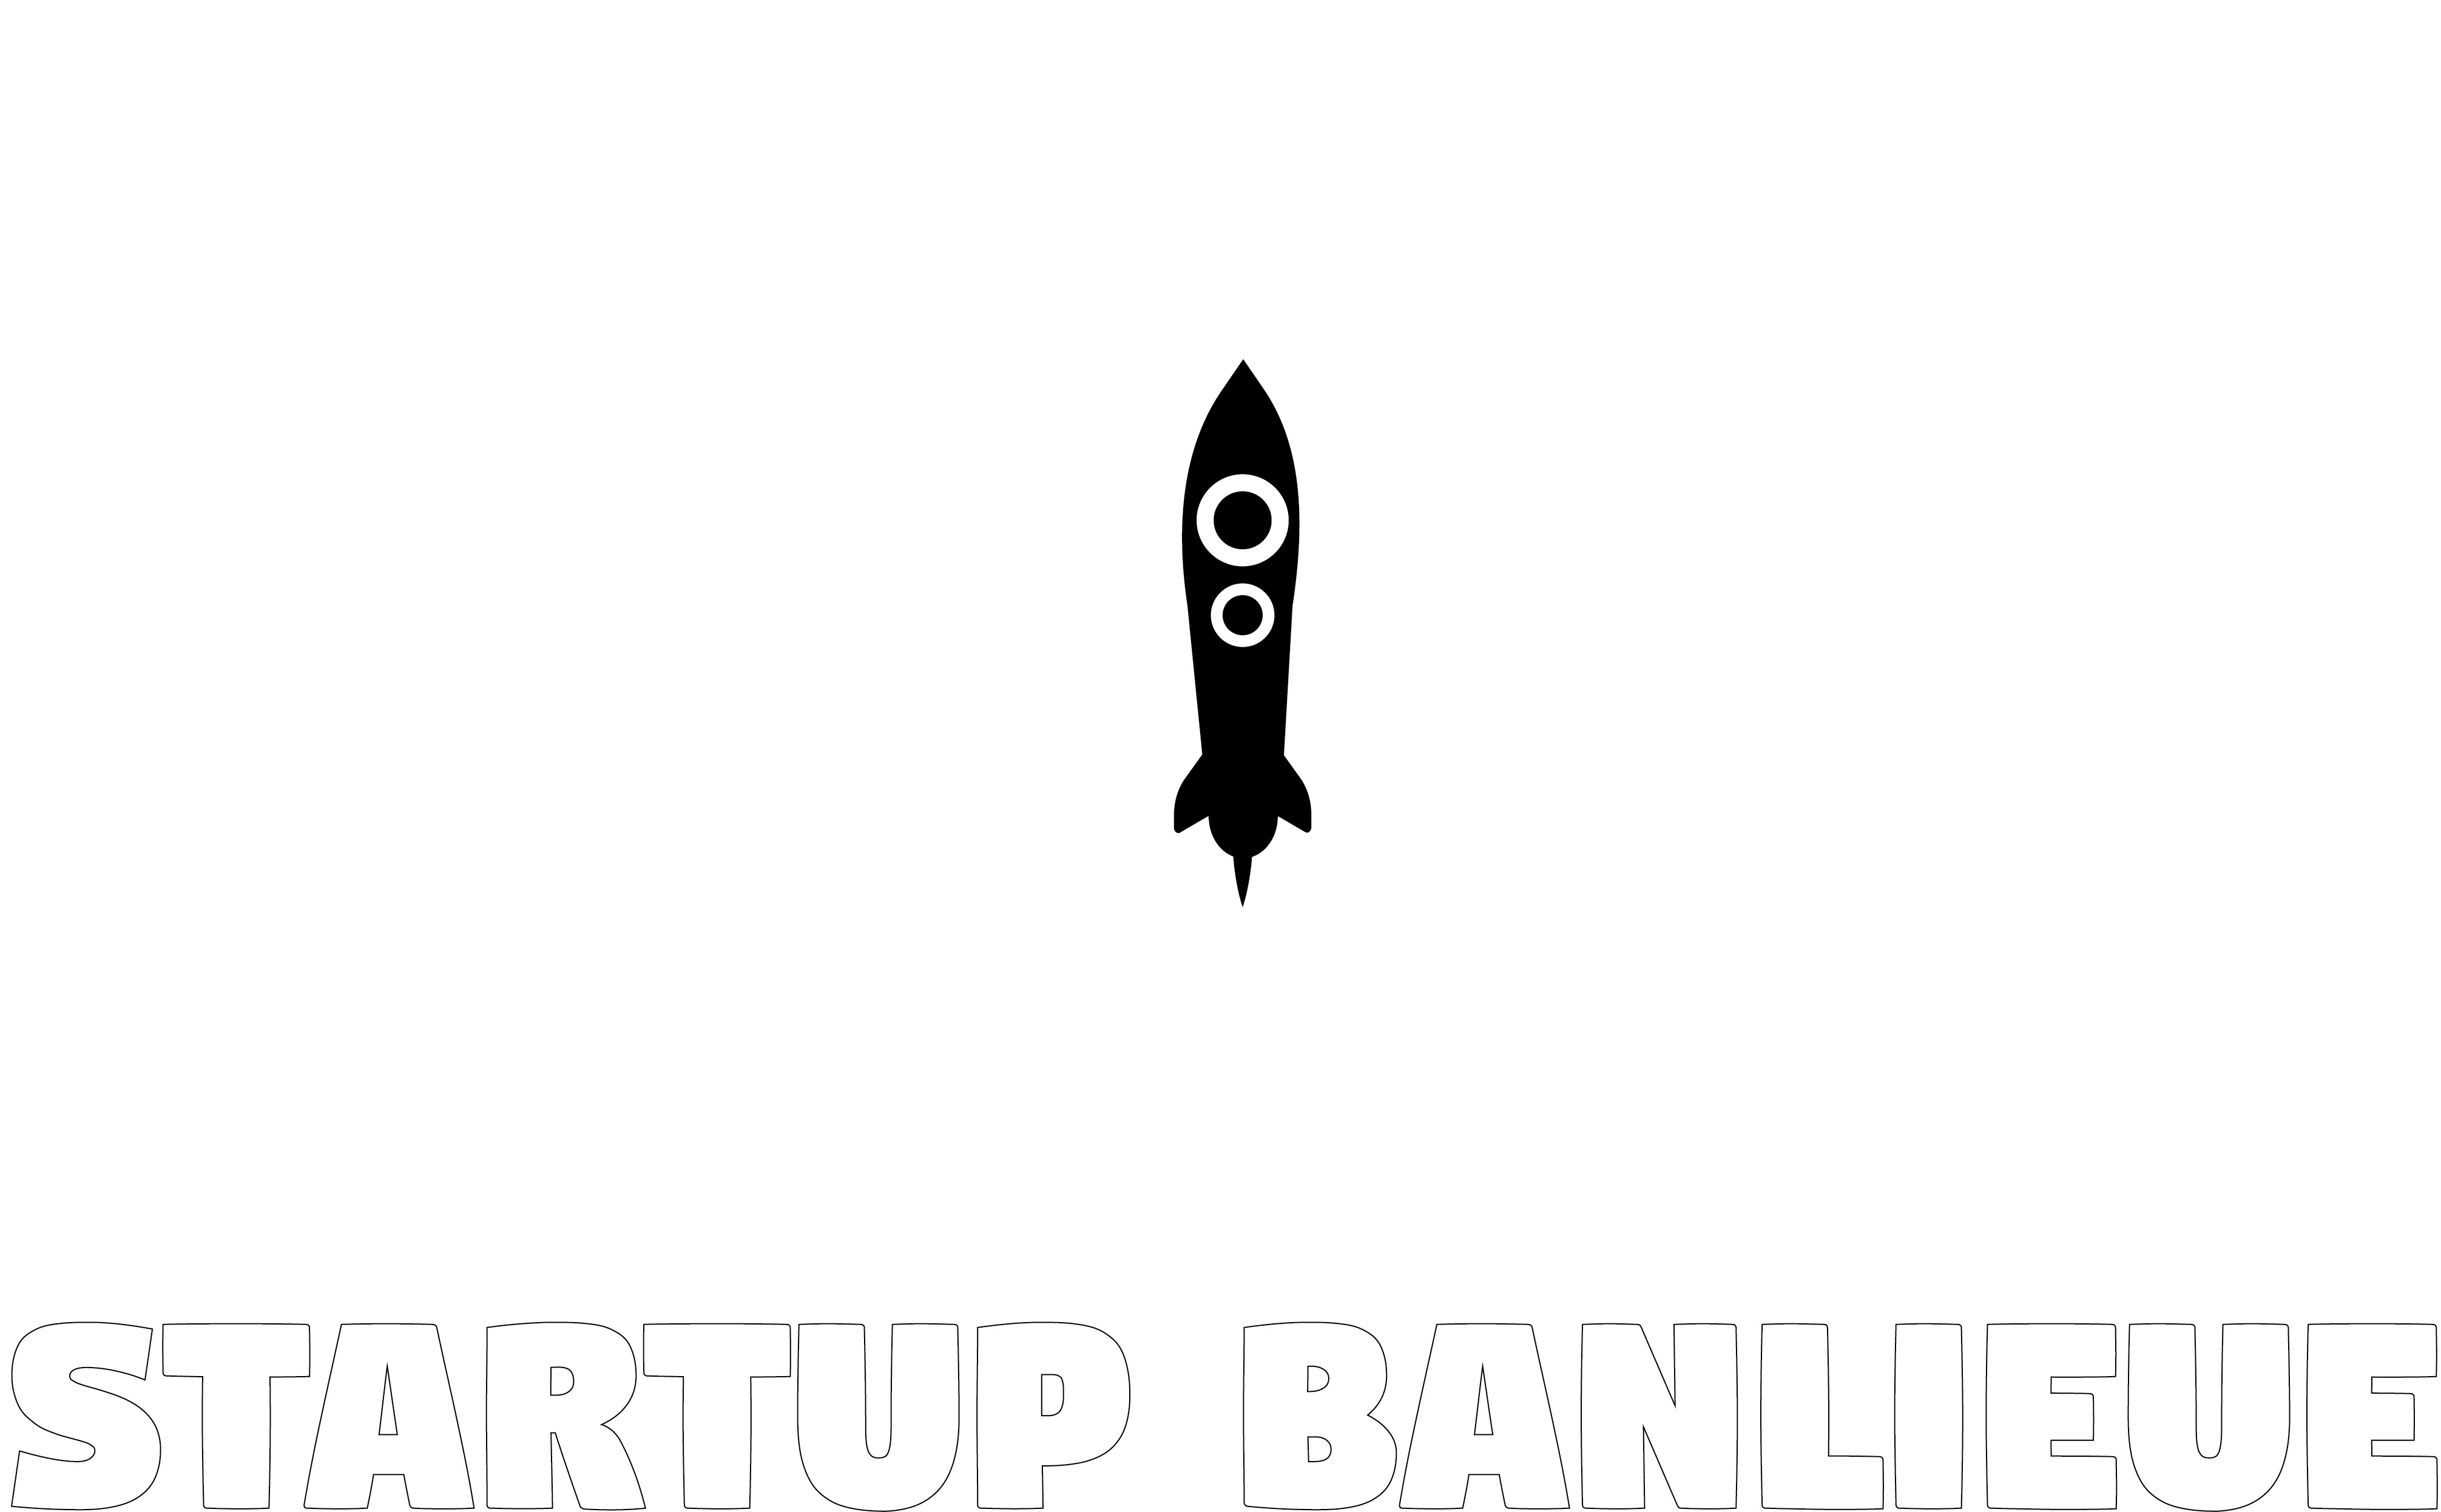 Startup Banlieue